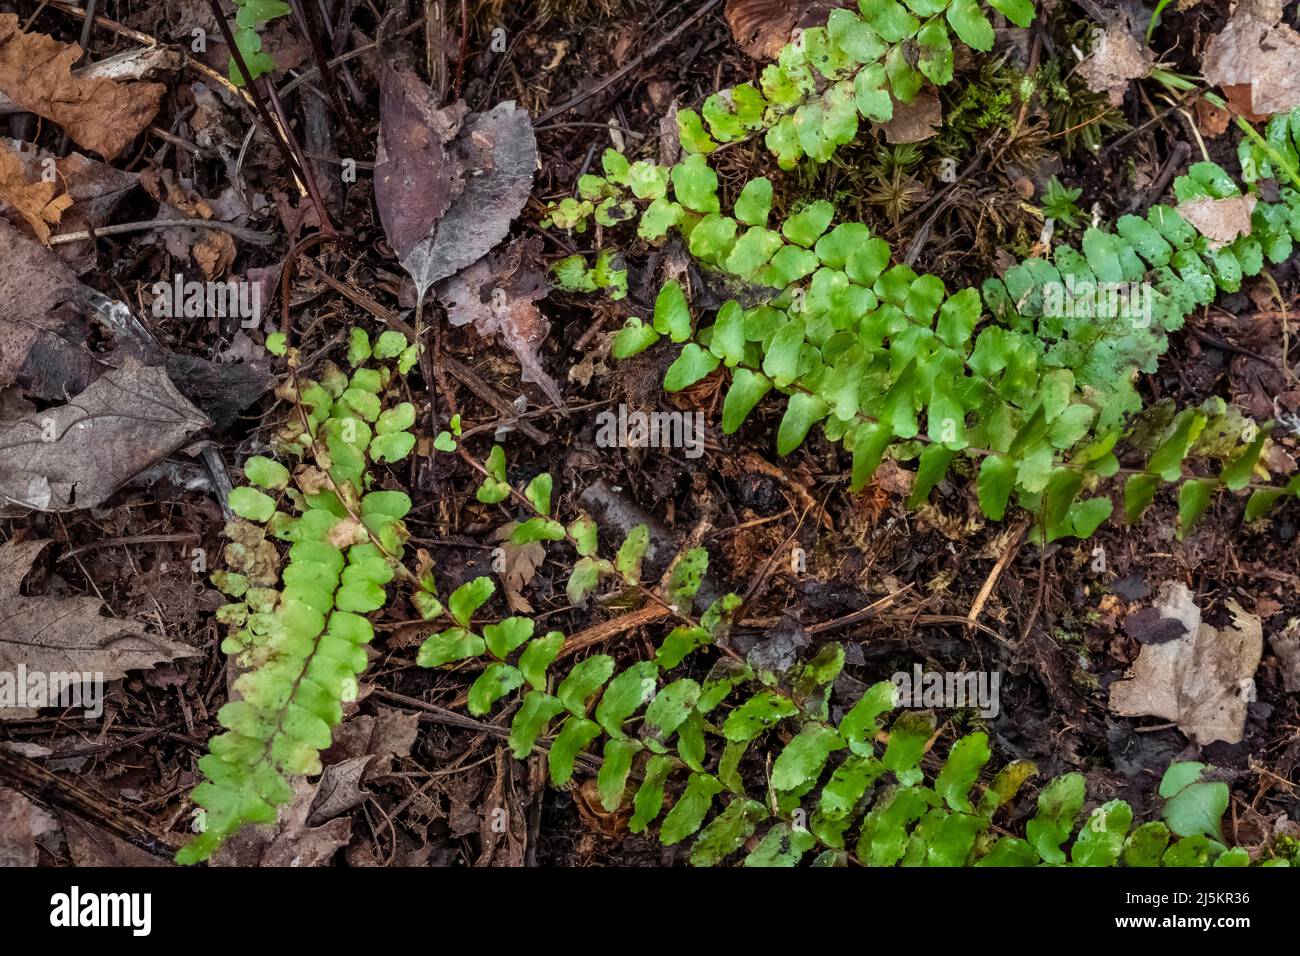 Ebony Spleenwort, Asplenium platyneuron,,in Woodland Park and Nature Preserve in Battle Creek, Michigan, USA Stock Photo